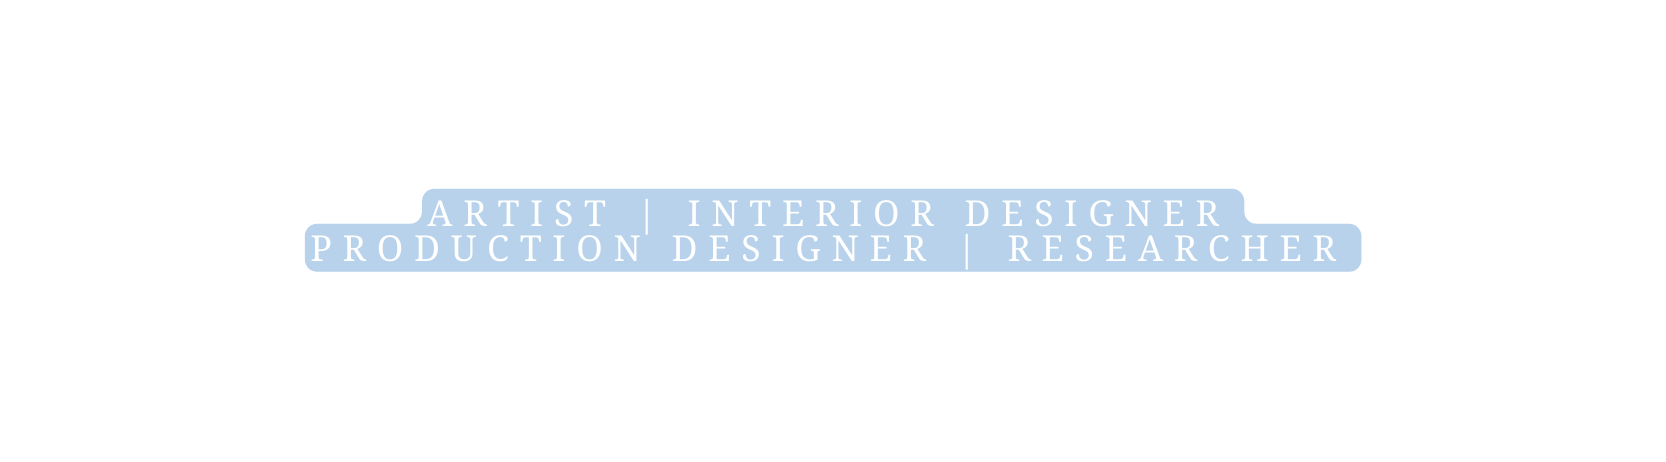 Artist Interior Designer Production Designer Researcher